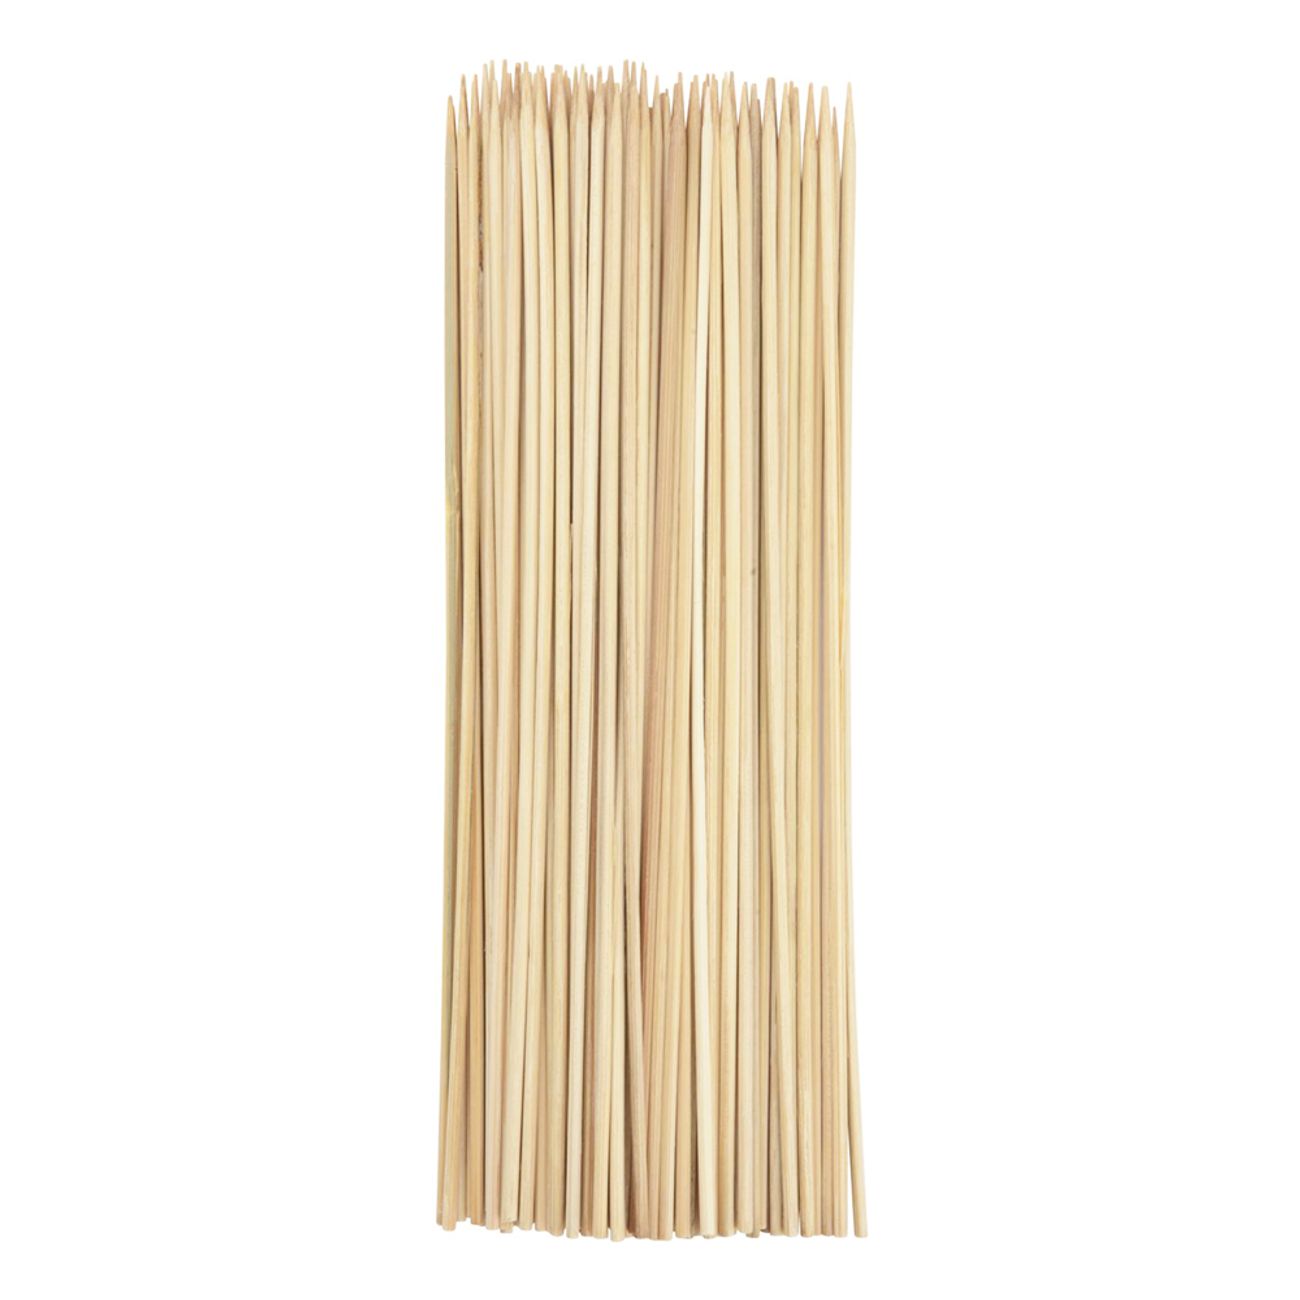 grillspett-bambu2-2